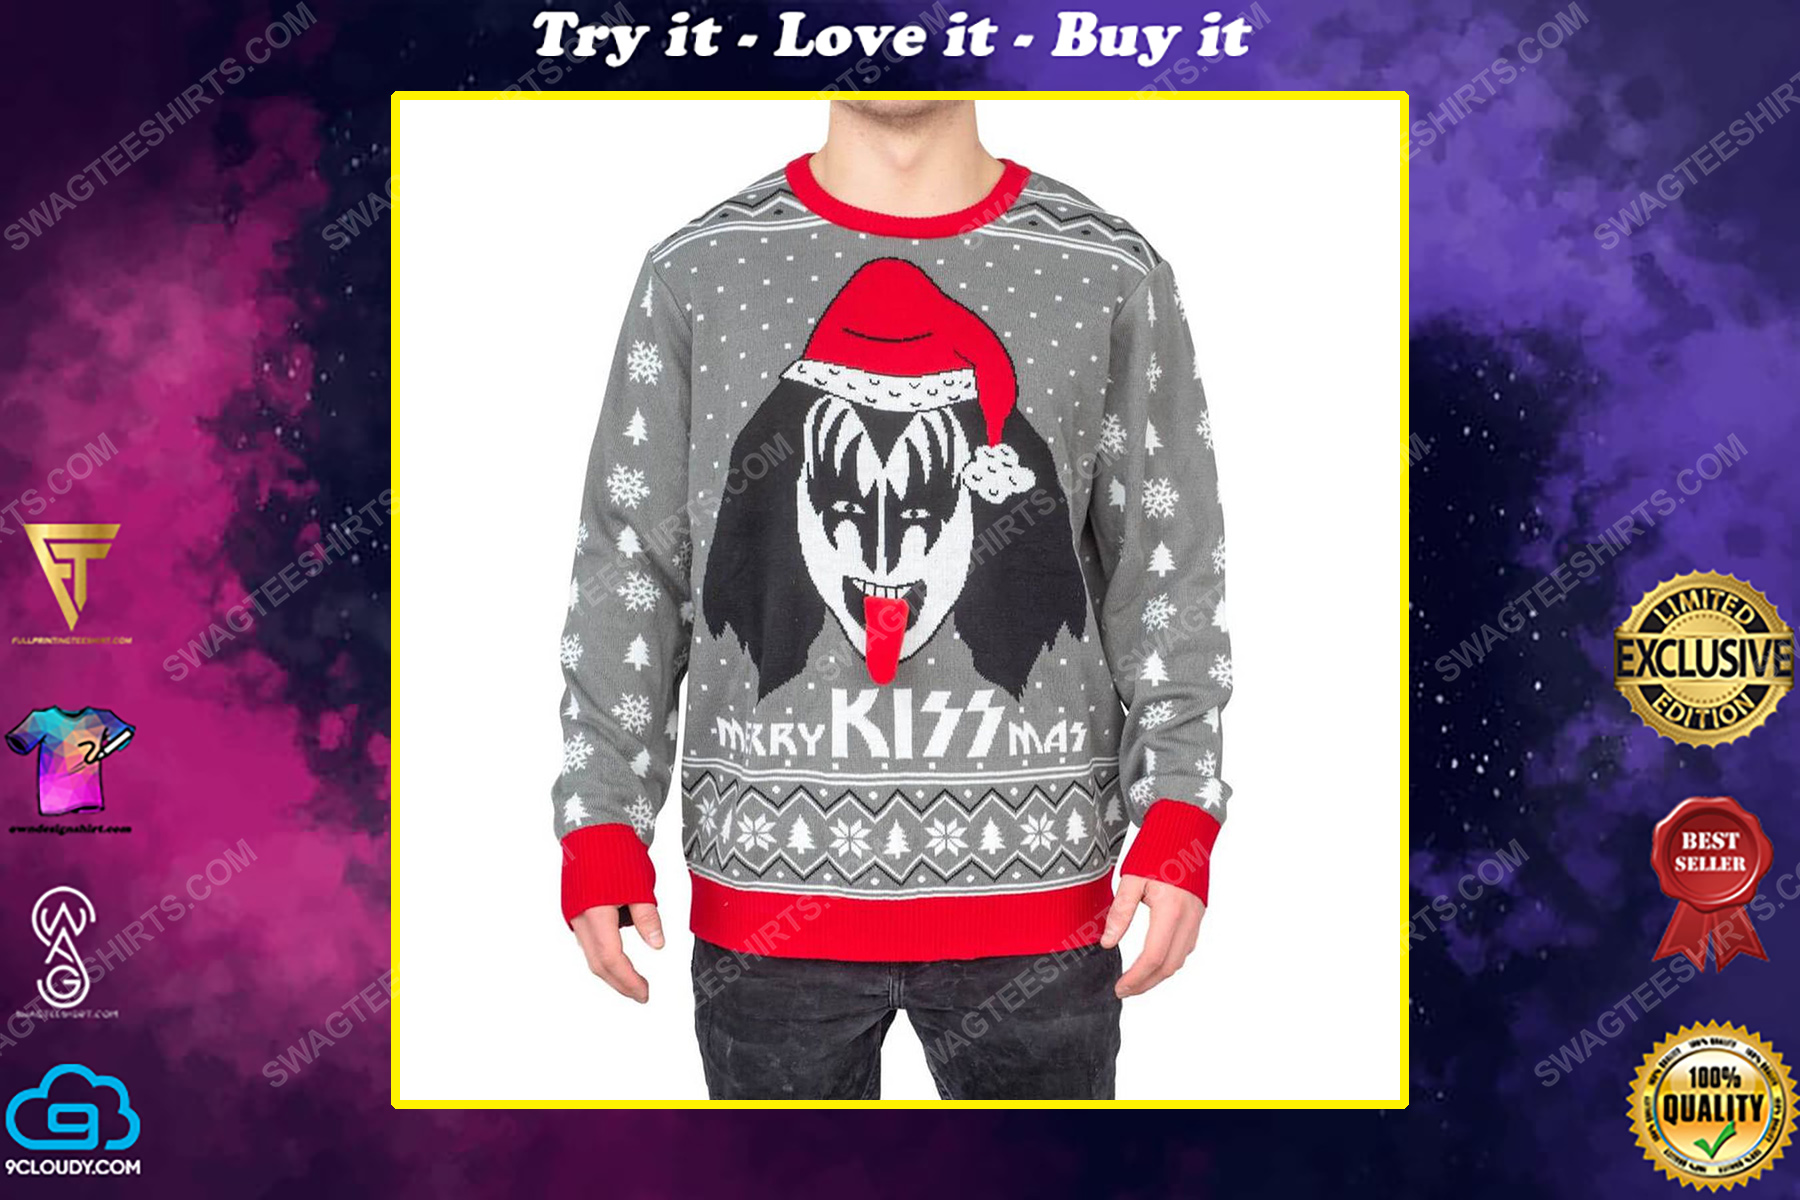 Merry kiss mas flappy kiss rock band full print ugly christmas sweater